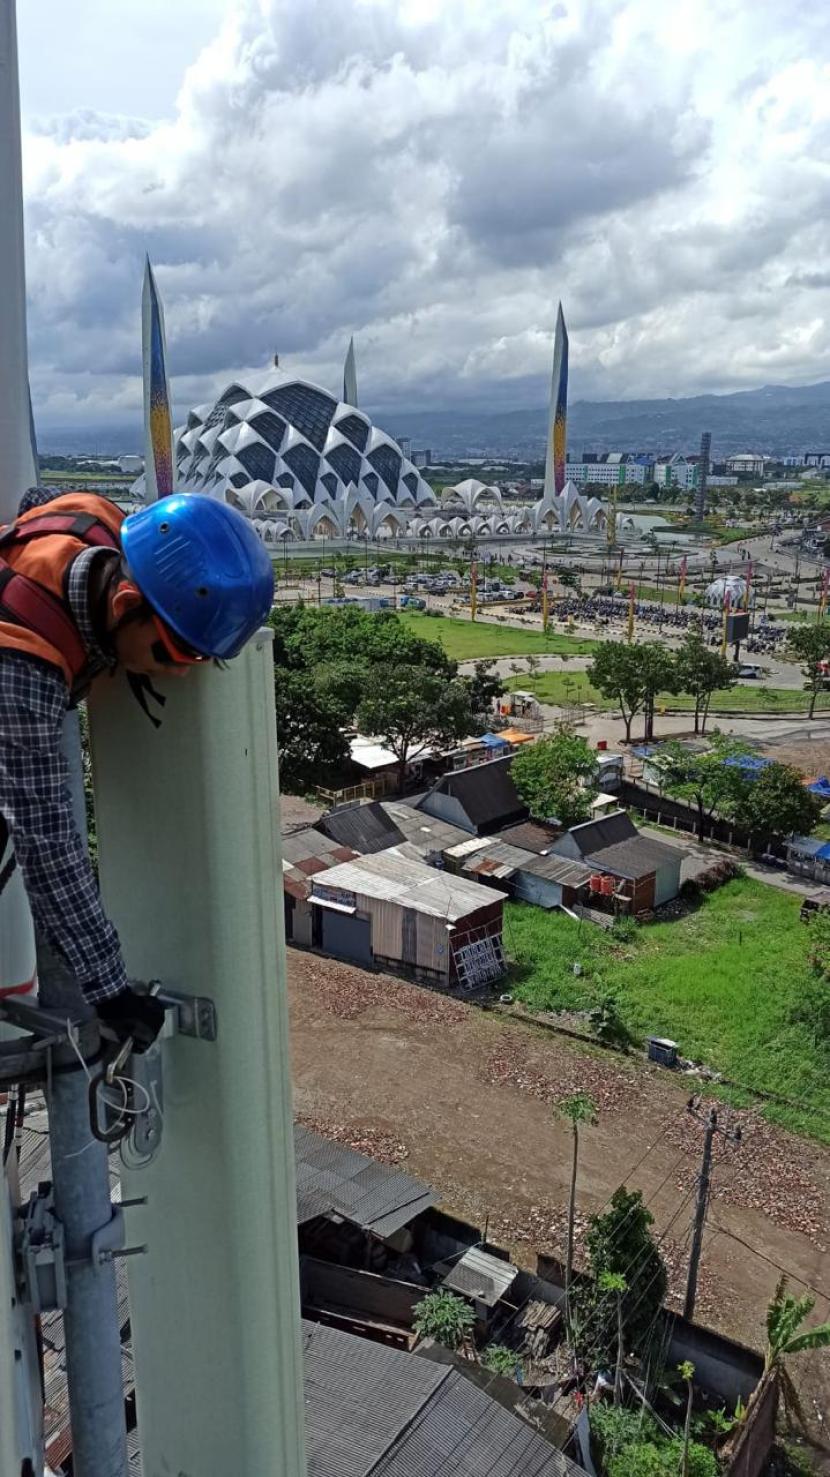 Seorang teknisi XL Axiata sedang melakukan pemeliharaan perangkat BTS (Base Transceiver Station) di sebuah tower seputaran Masjid Raya Al-Jabbar, Kota Bandung